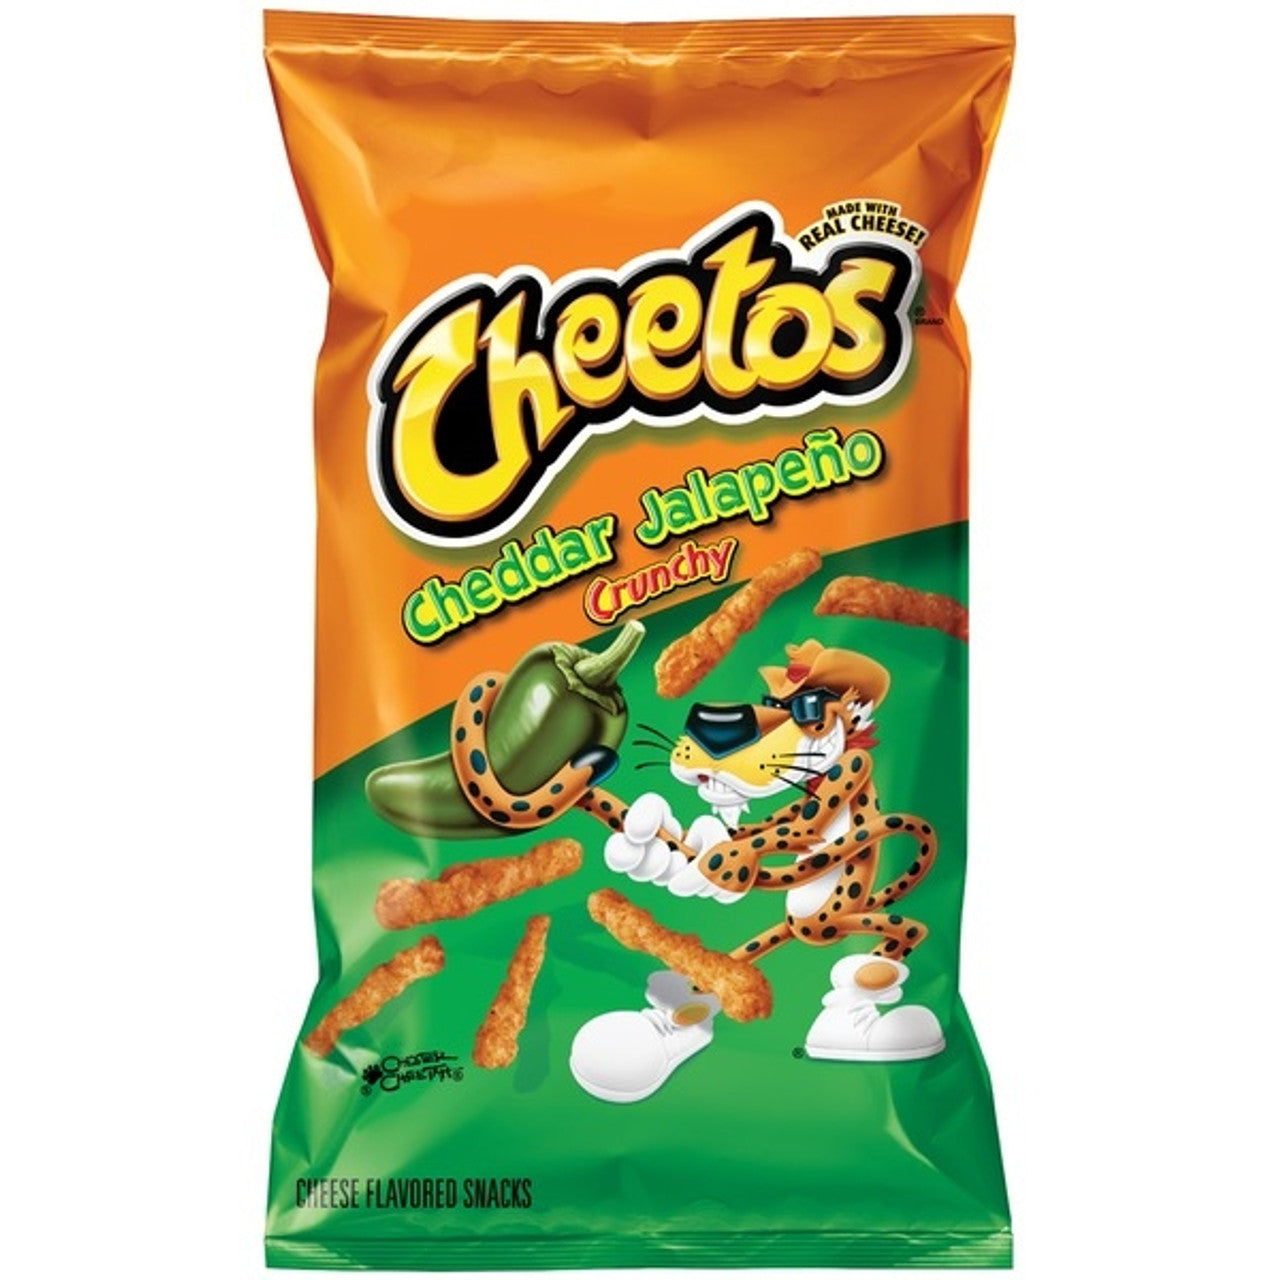 Cheetos Cheddar Jalapeño Crunchy 226.8g